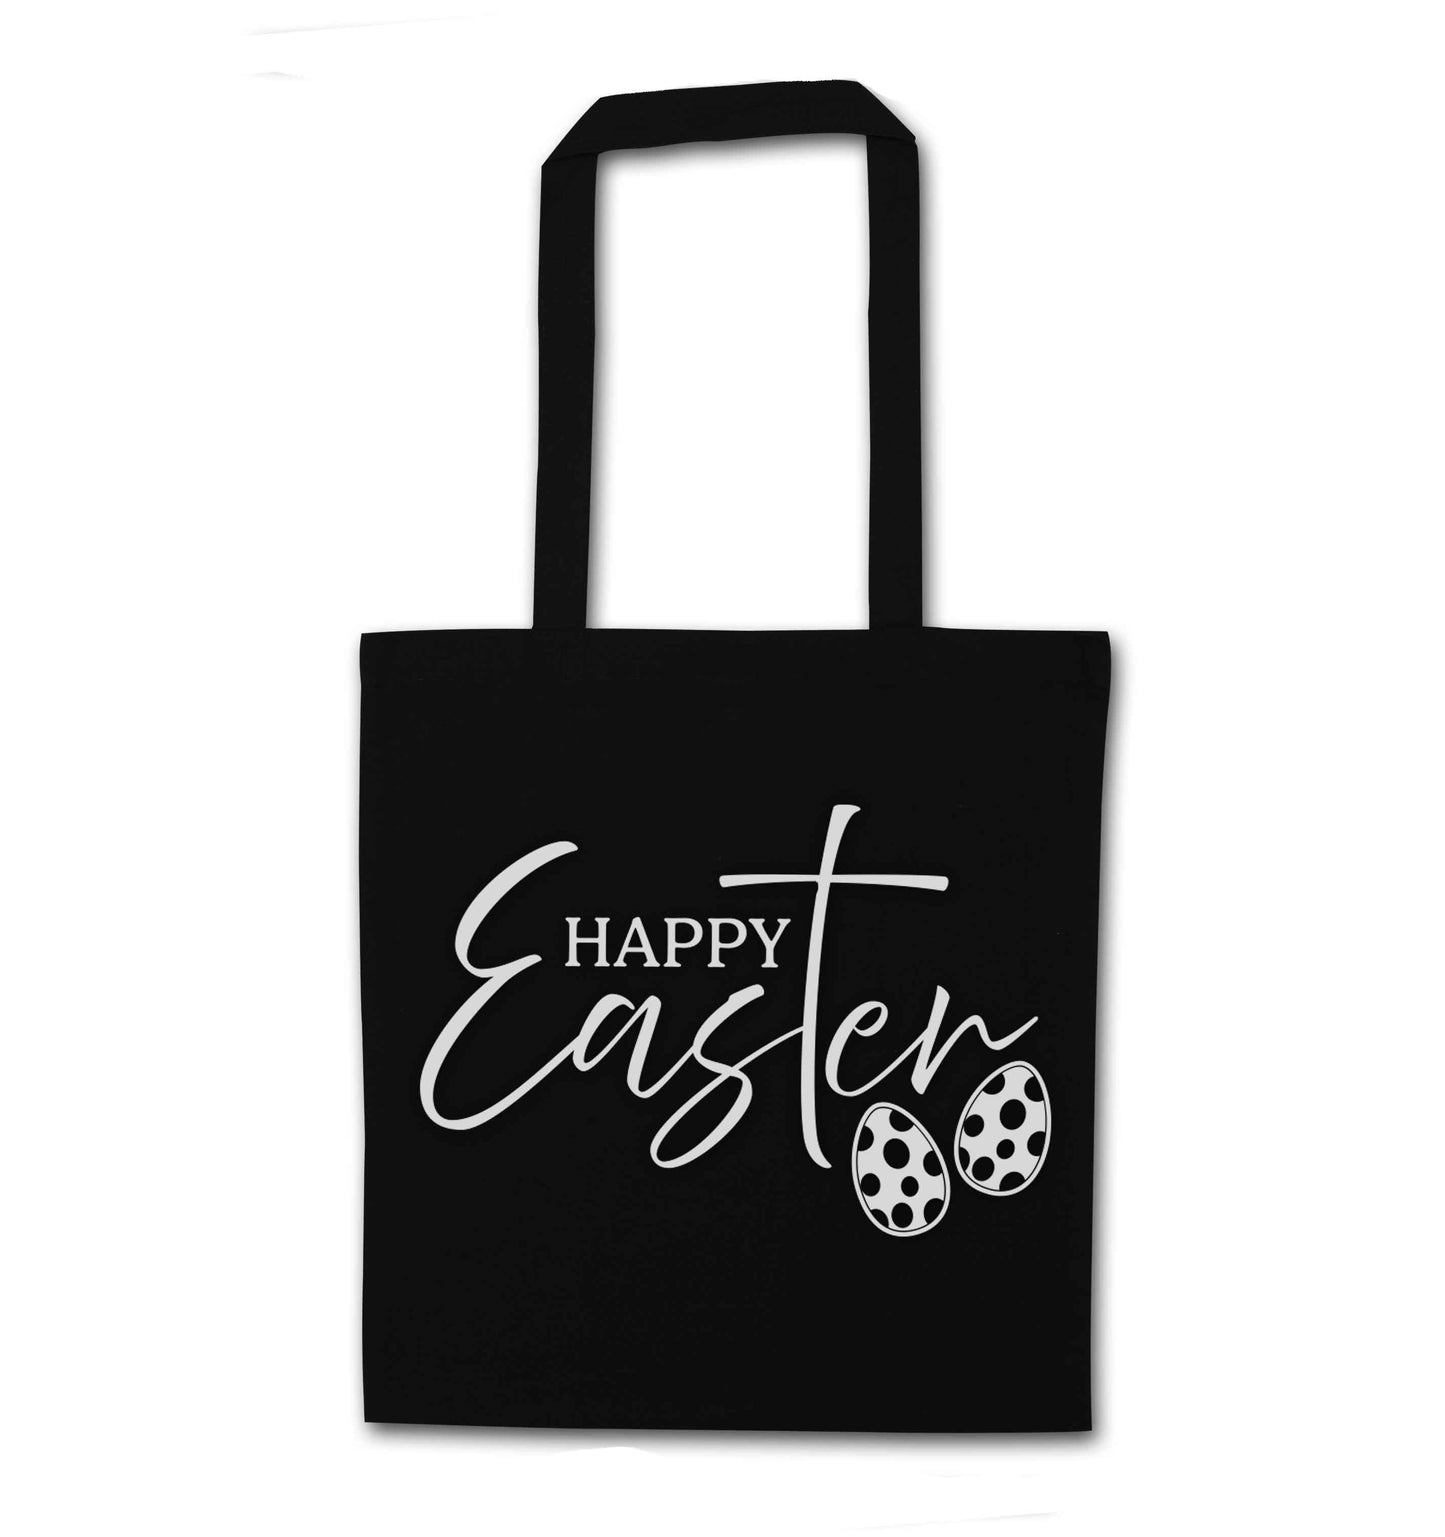 Happy Easter black tote bag